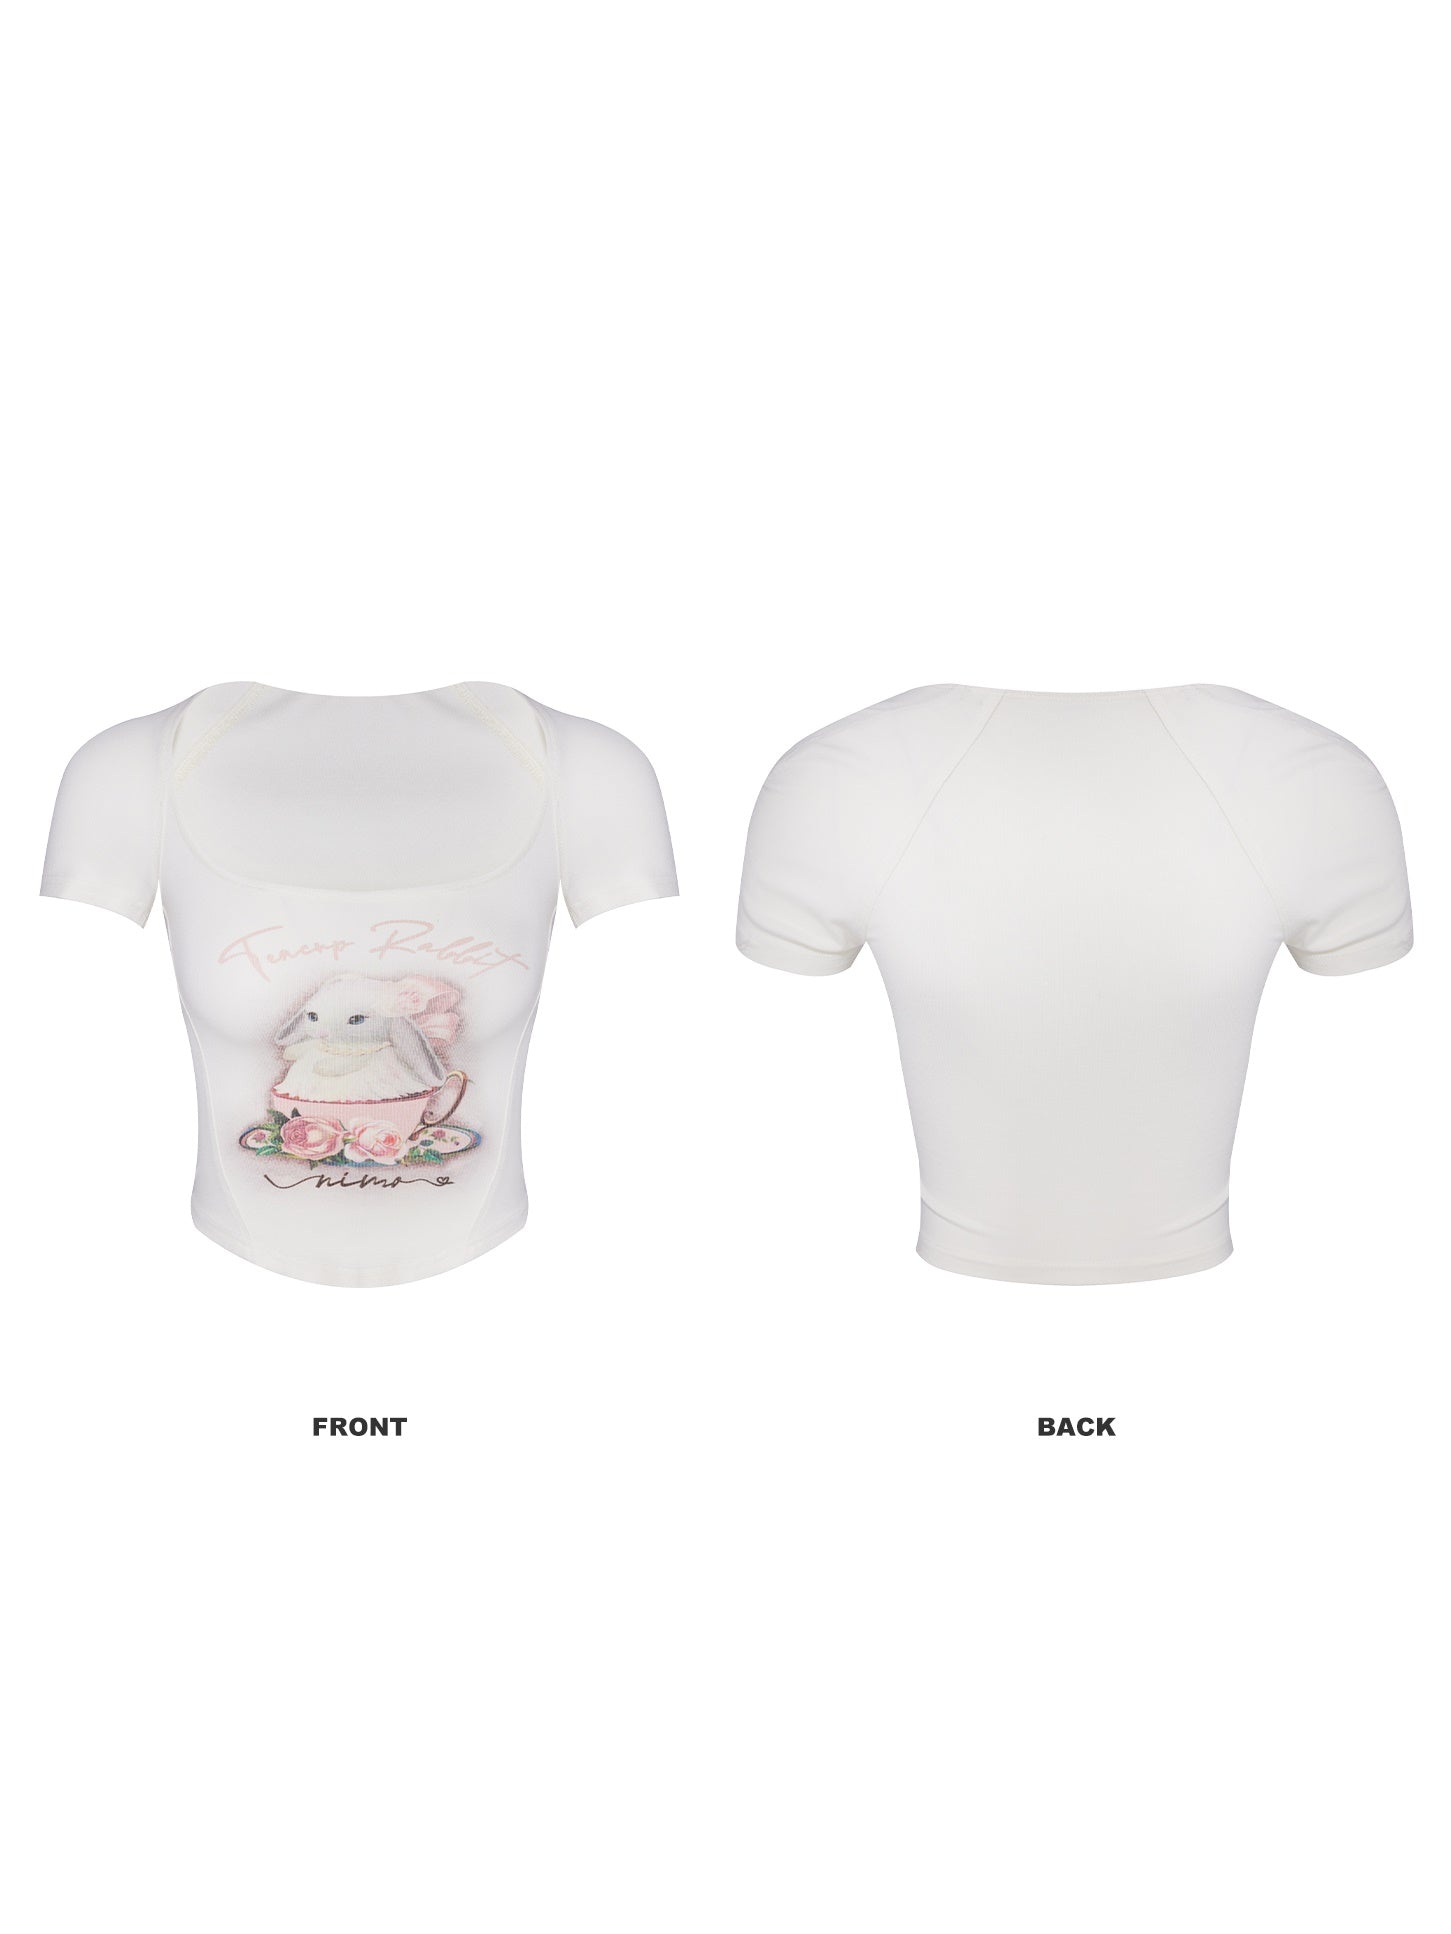 TEACUP Rabbit Short Sleeve T-Shirt &amp; Camisole